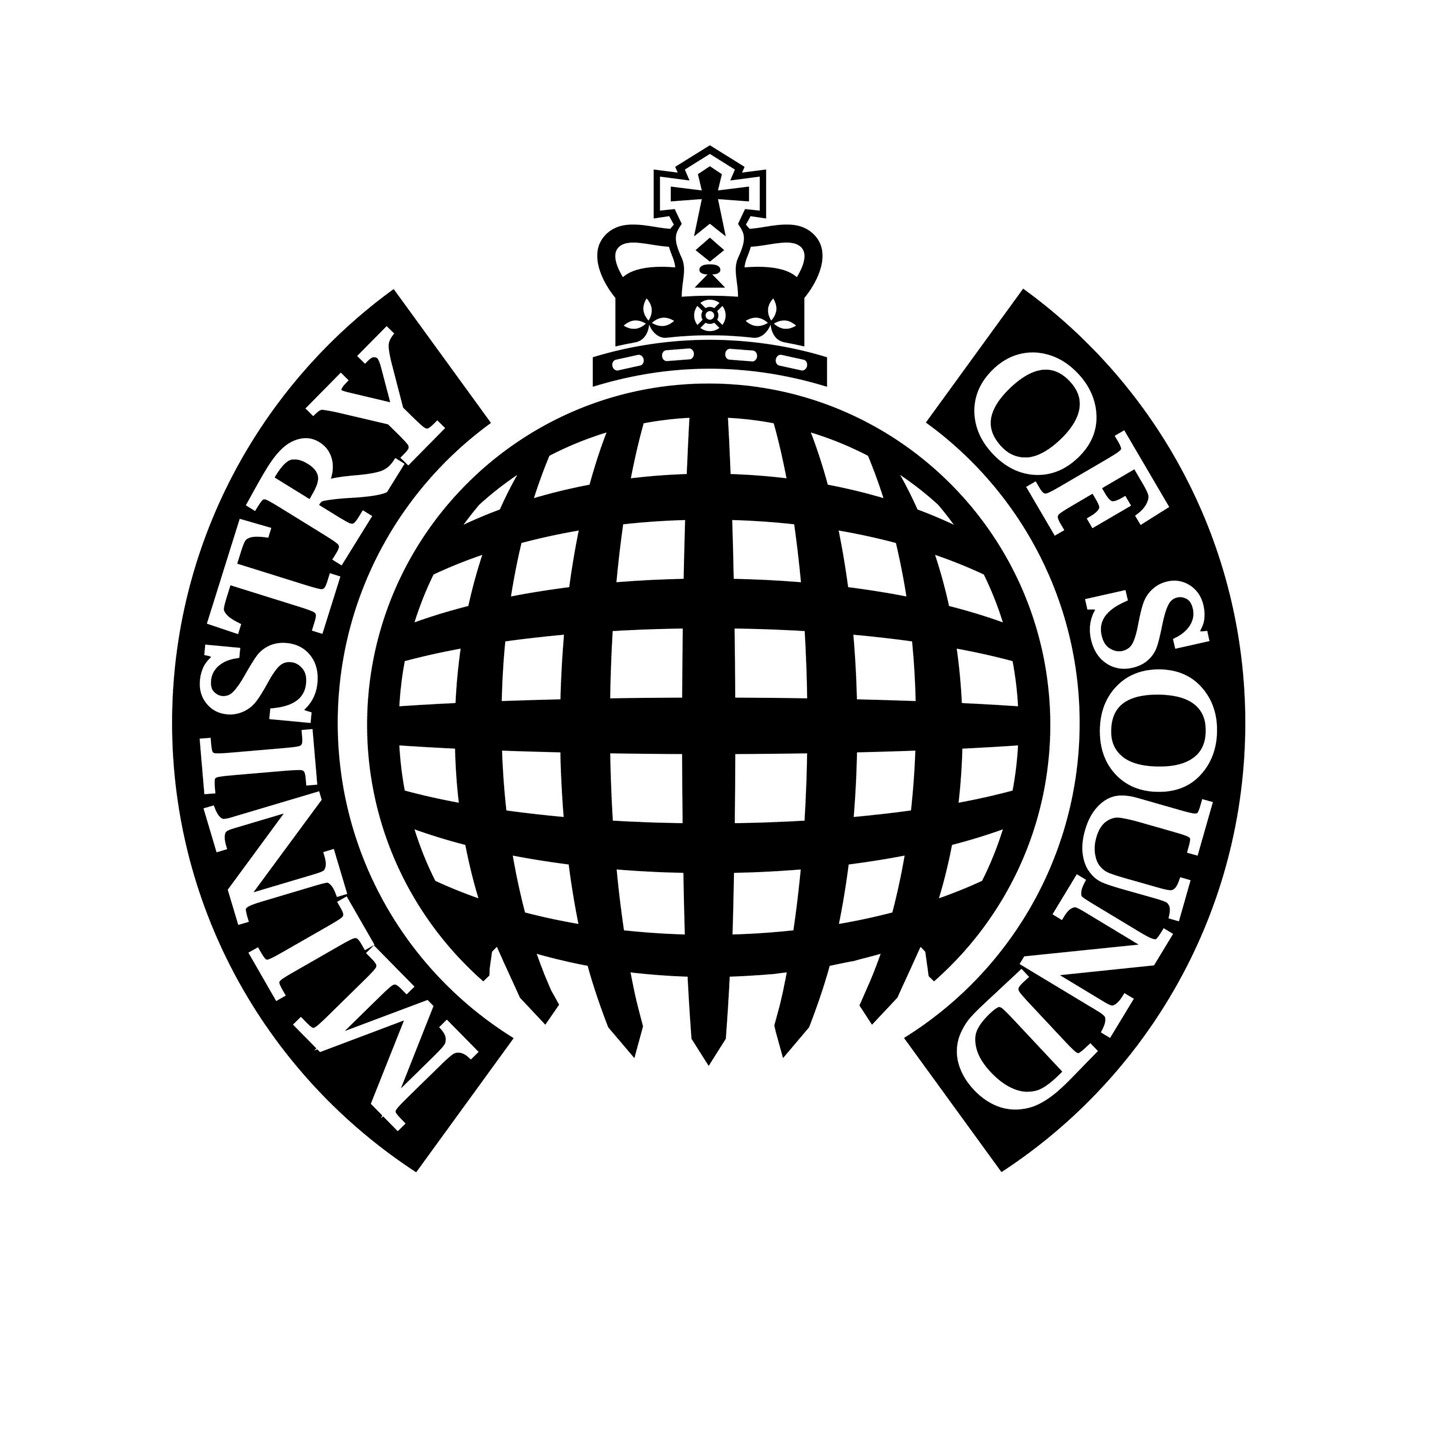 Ministry Of Sound,London